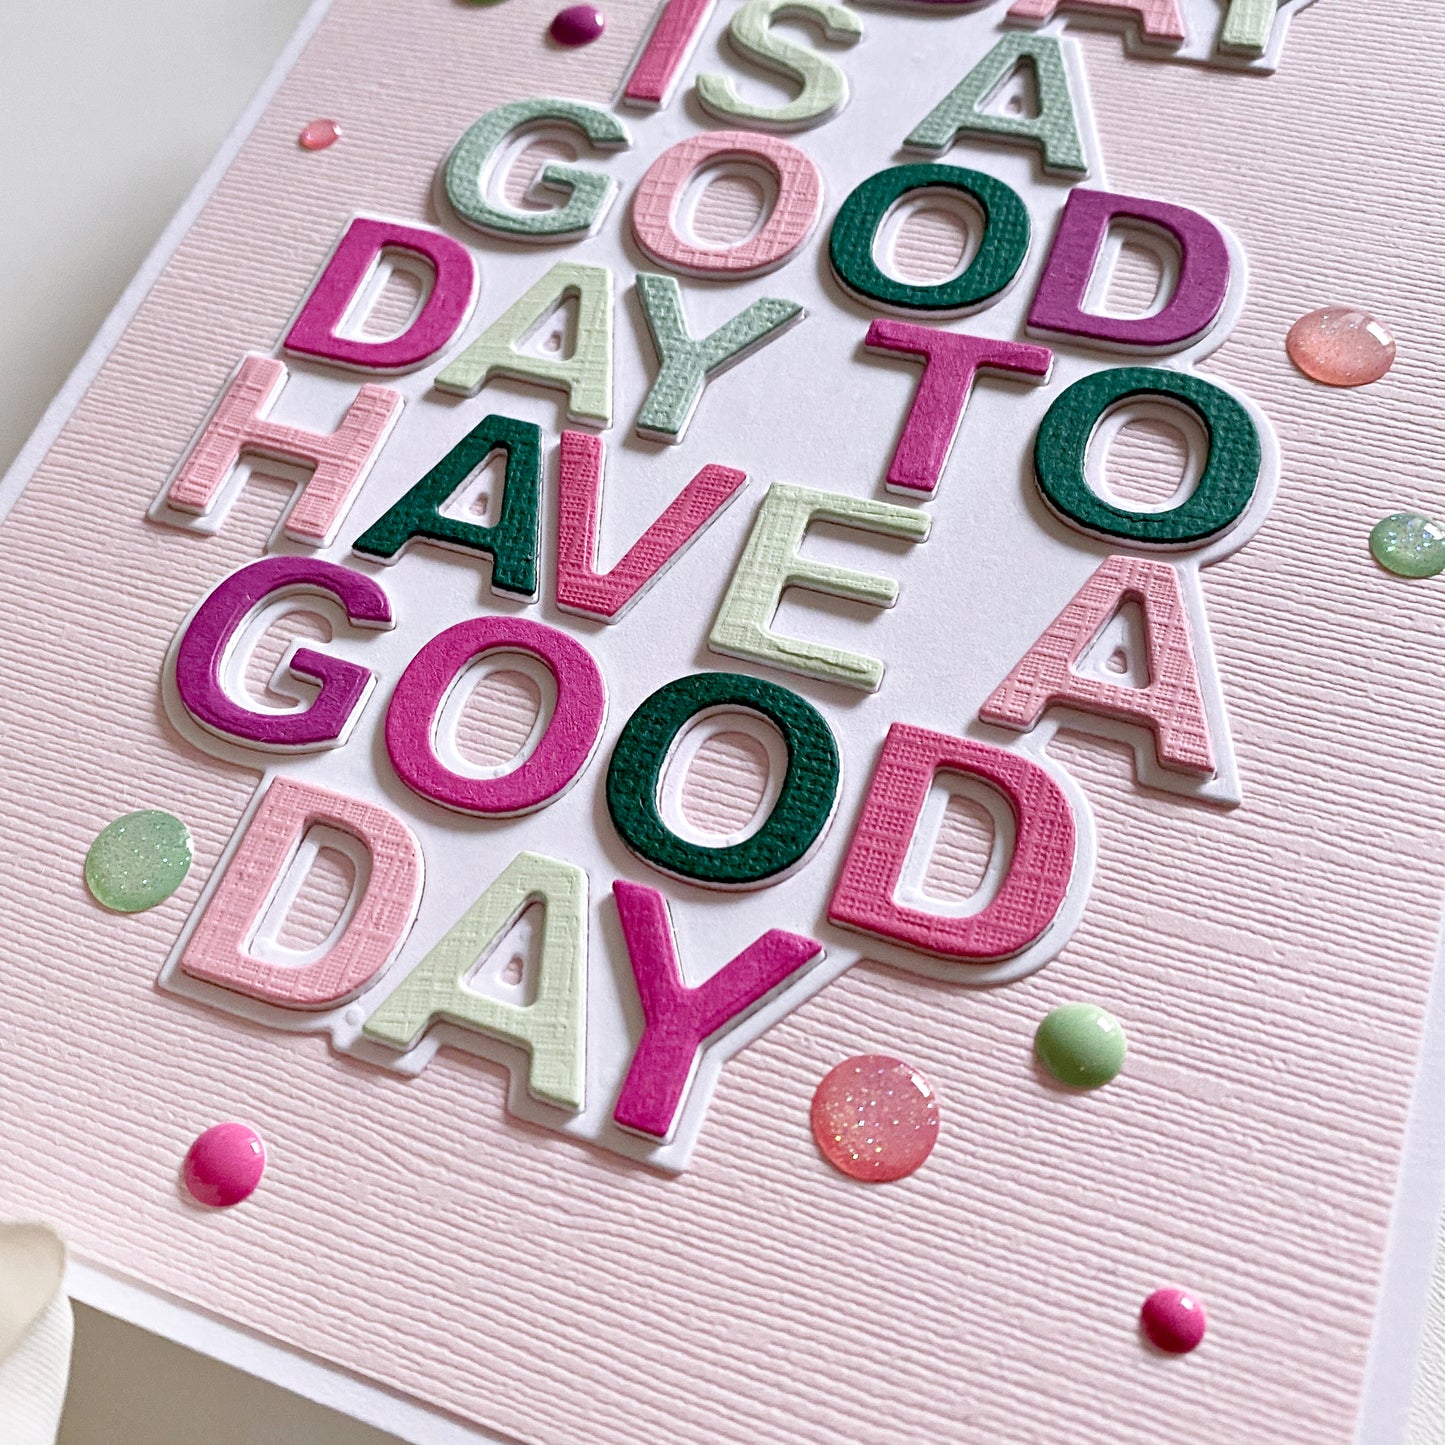 Today is a Good Day Stanze von Paige Taylor Evans